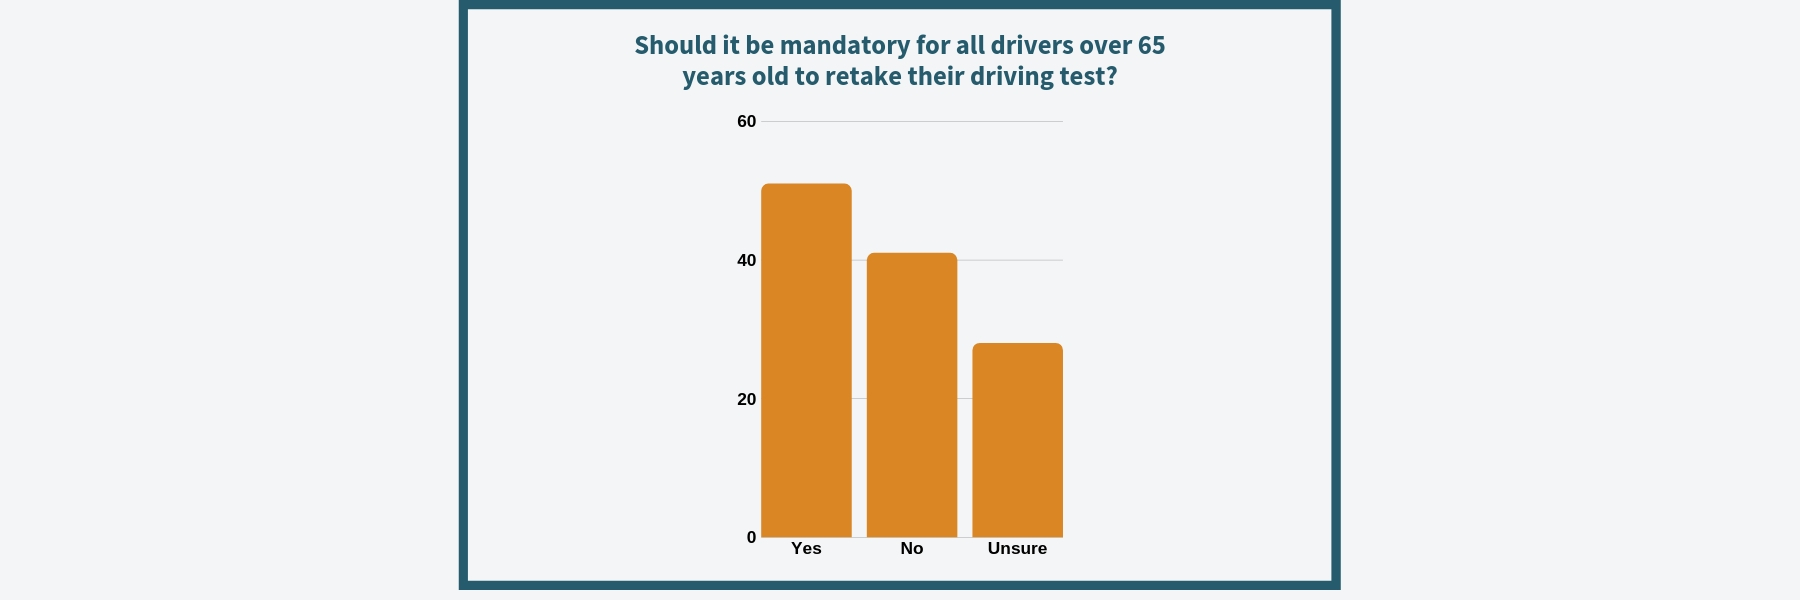 Should retests be mandatory for older drivers?